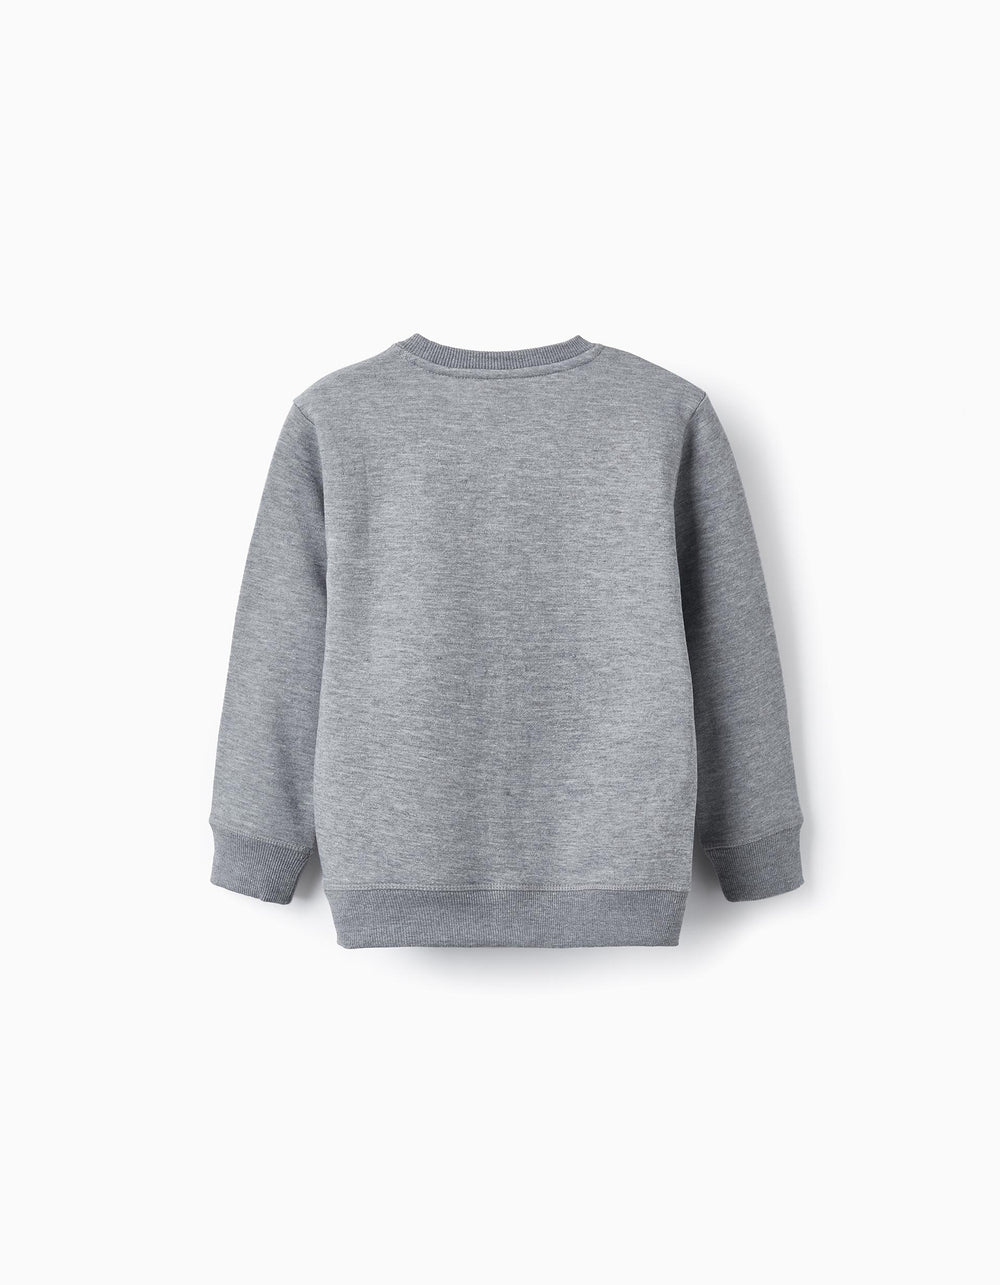 Sweatshirt for Boys 'Endangered species', Grey